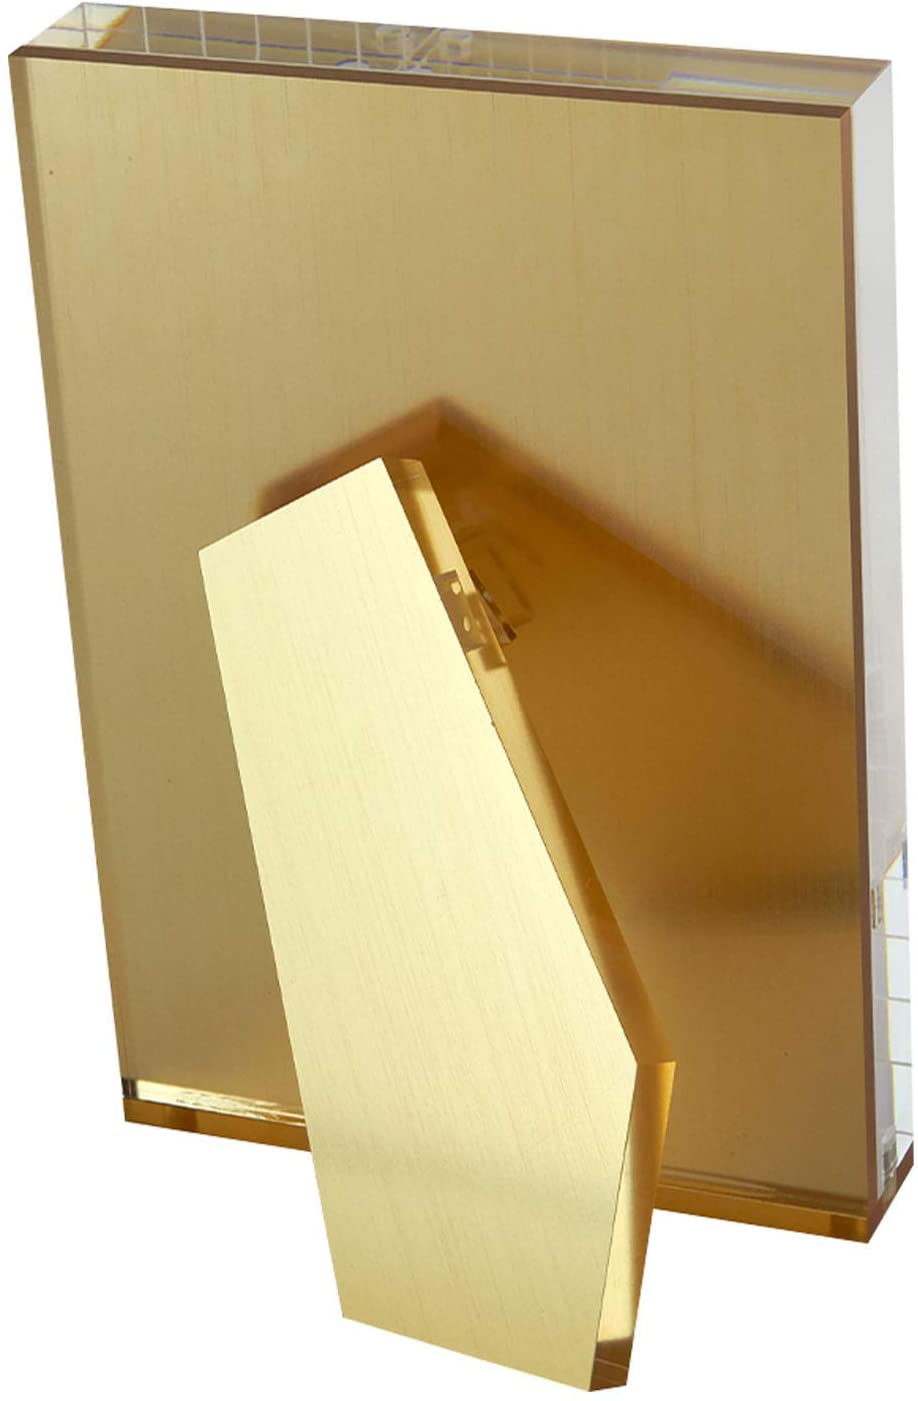 Tizo Tan Wood 4x6 Wood Photo Frame - Distinctive Decor